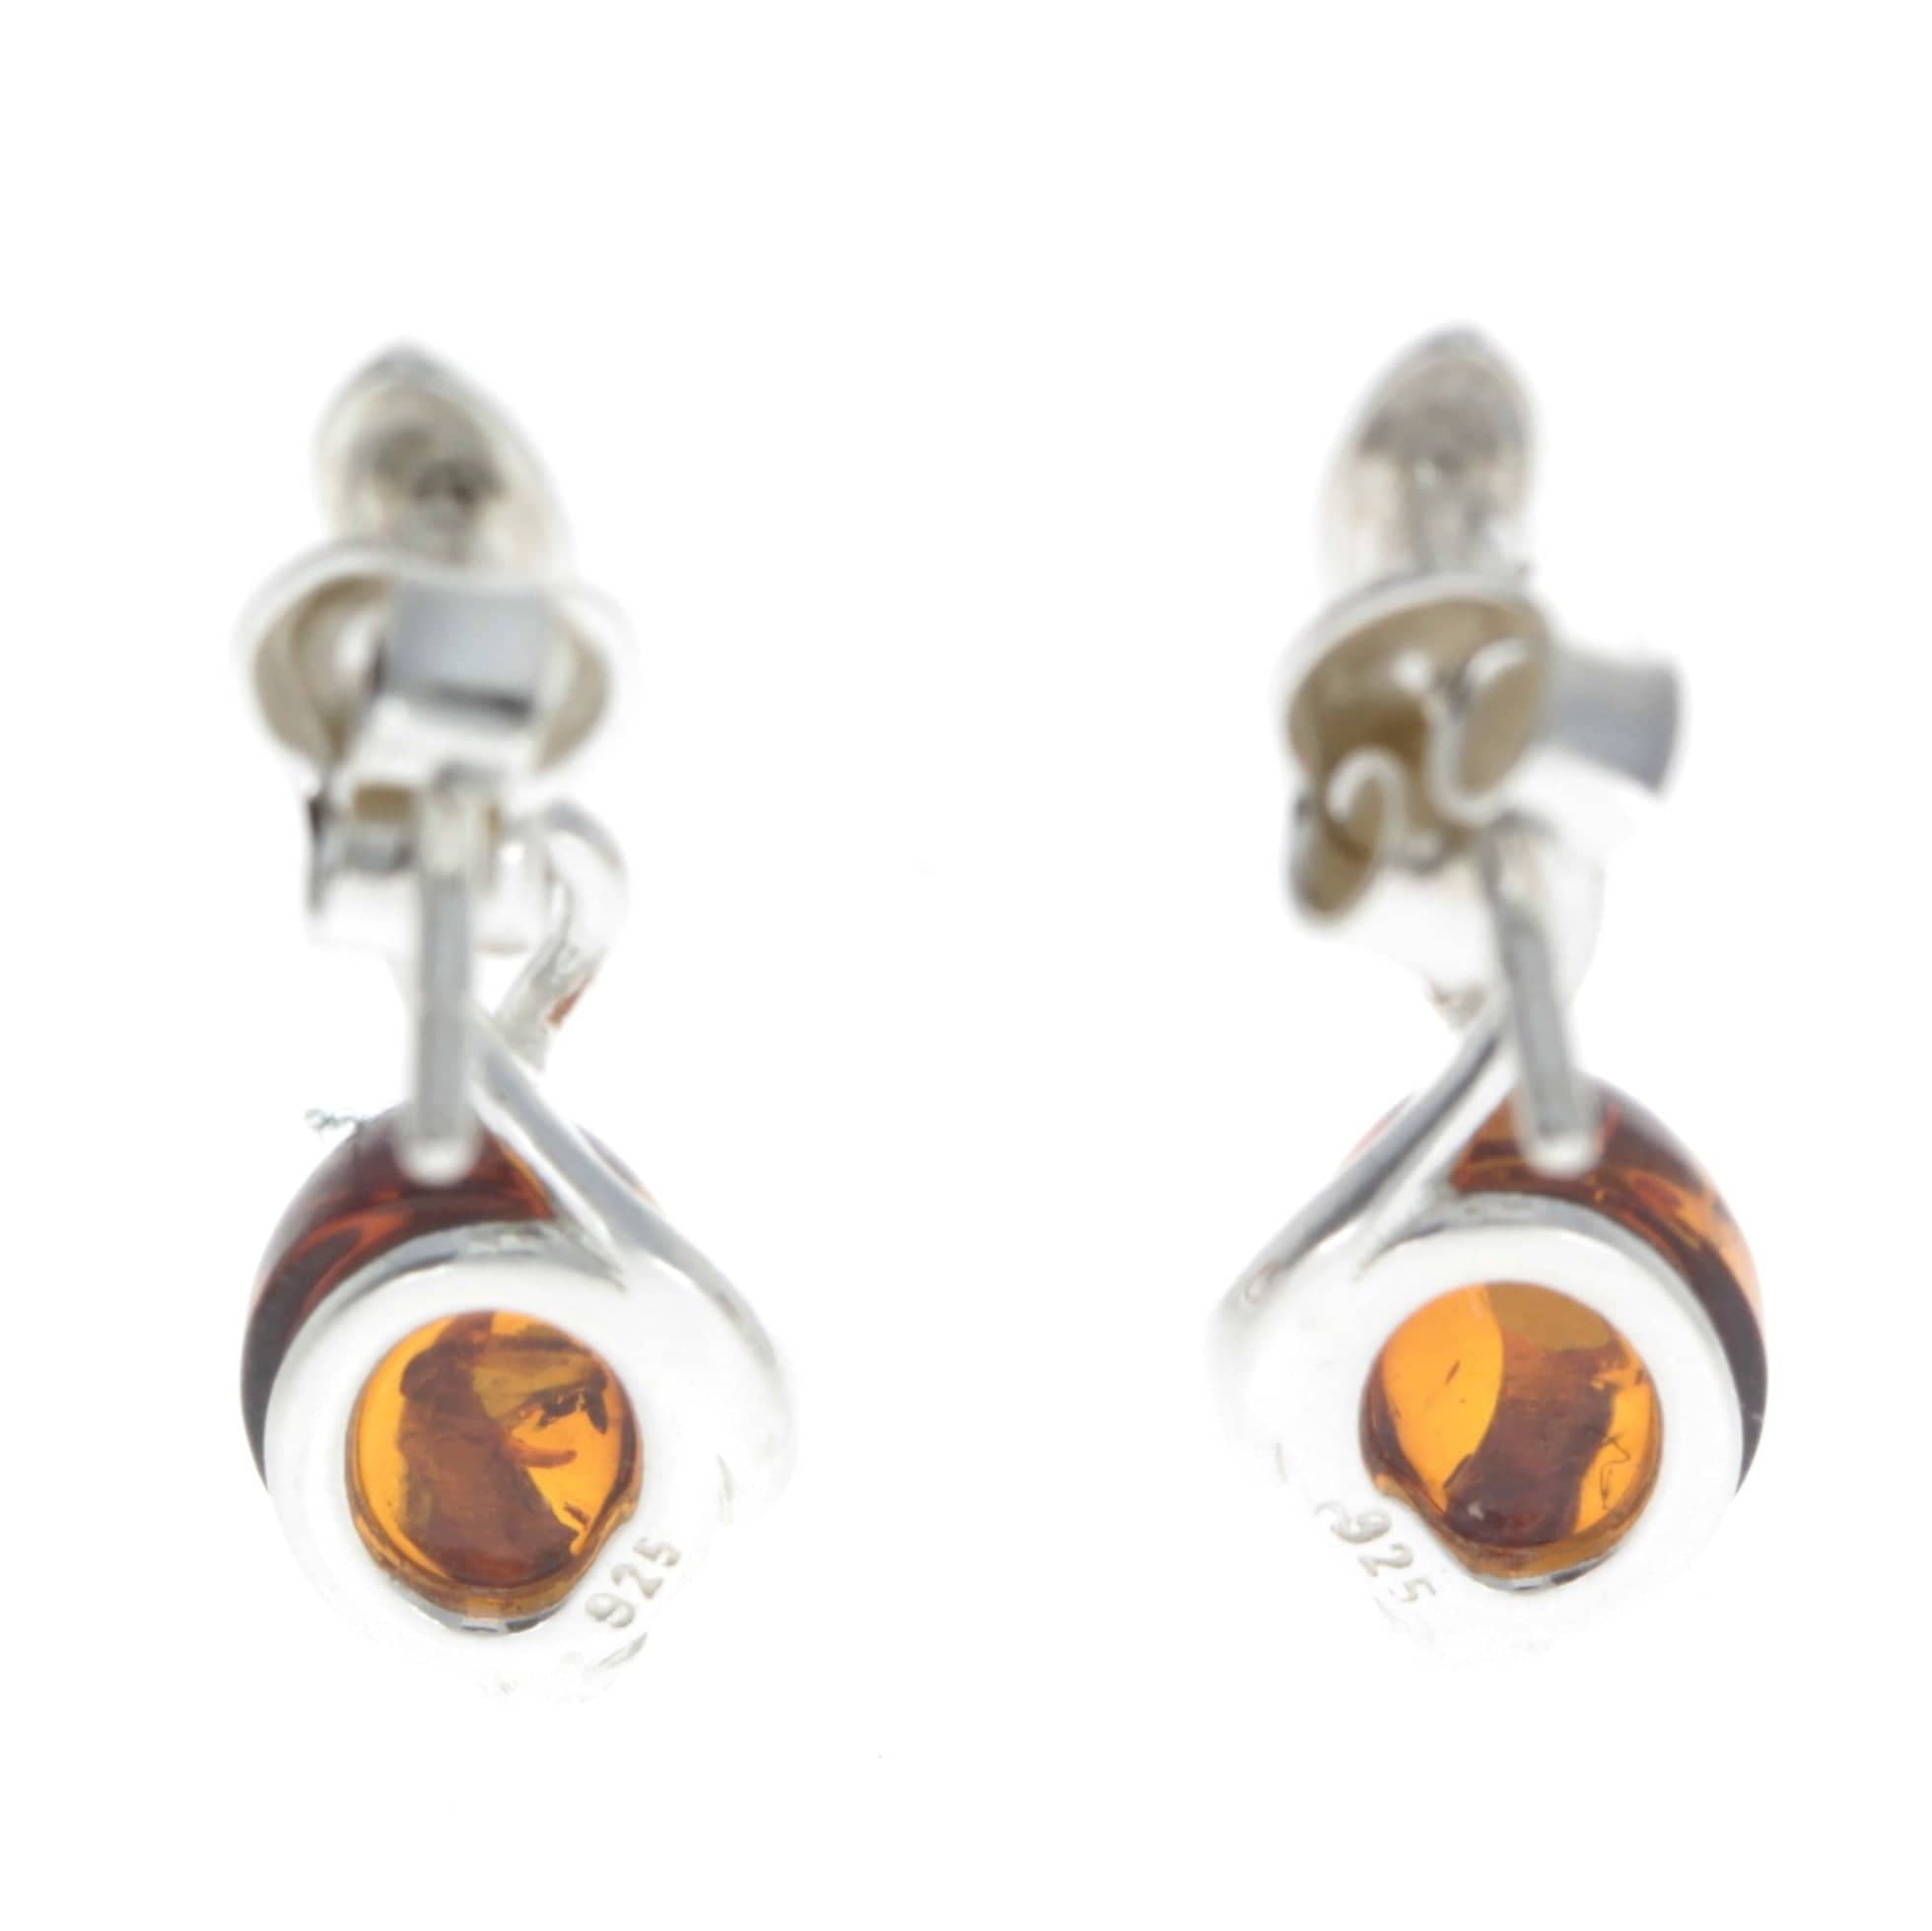 925 Sterling Silver & Genuine Baltic Amber Modern Drop Earrings - GL175